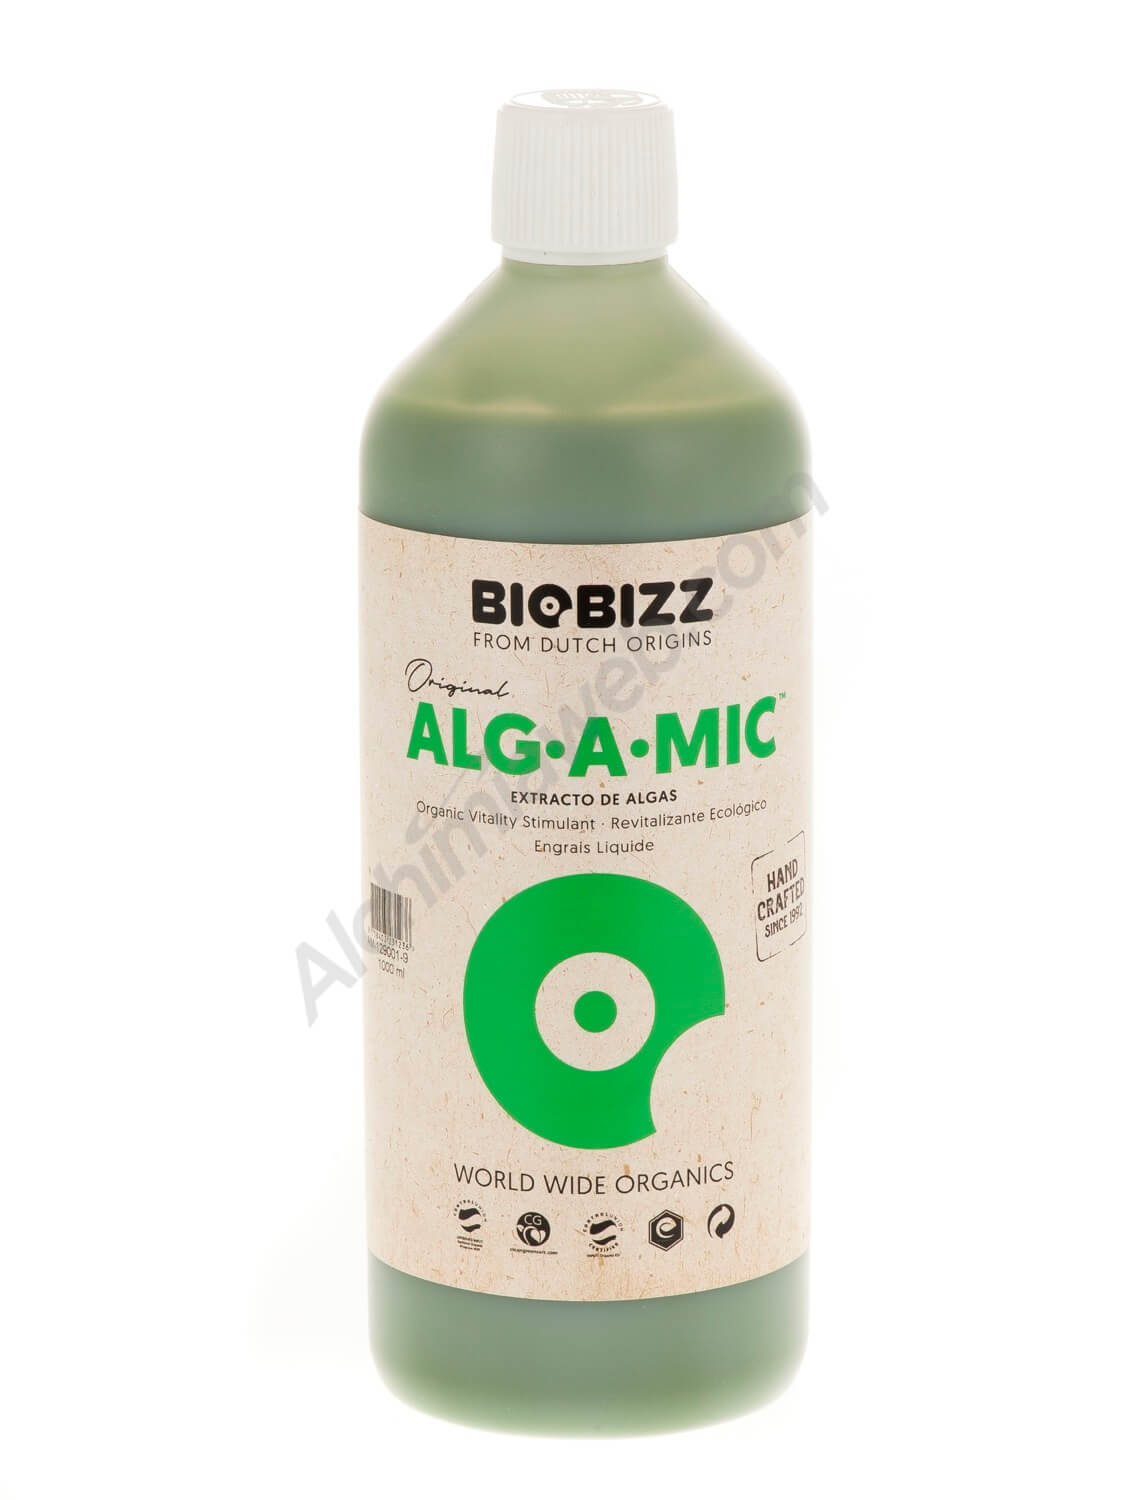 Sale of Biobizz Algamic